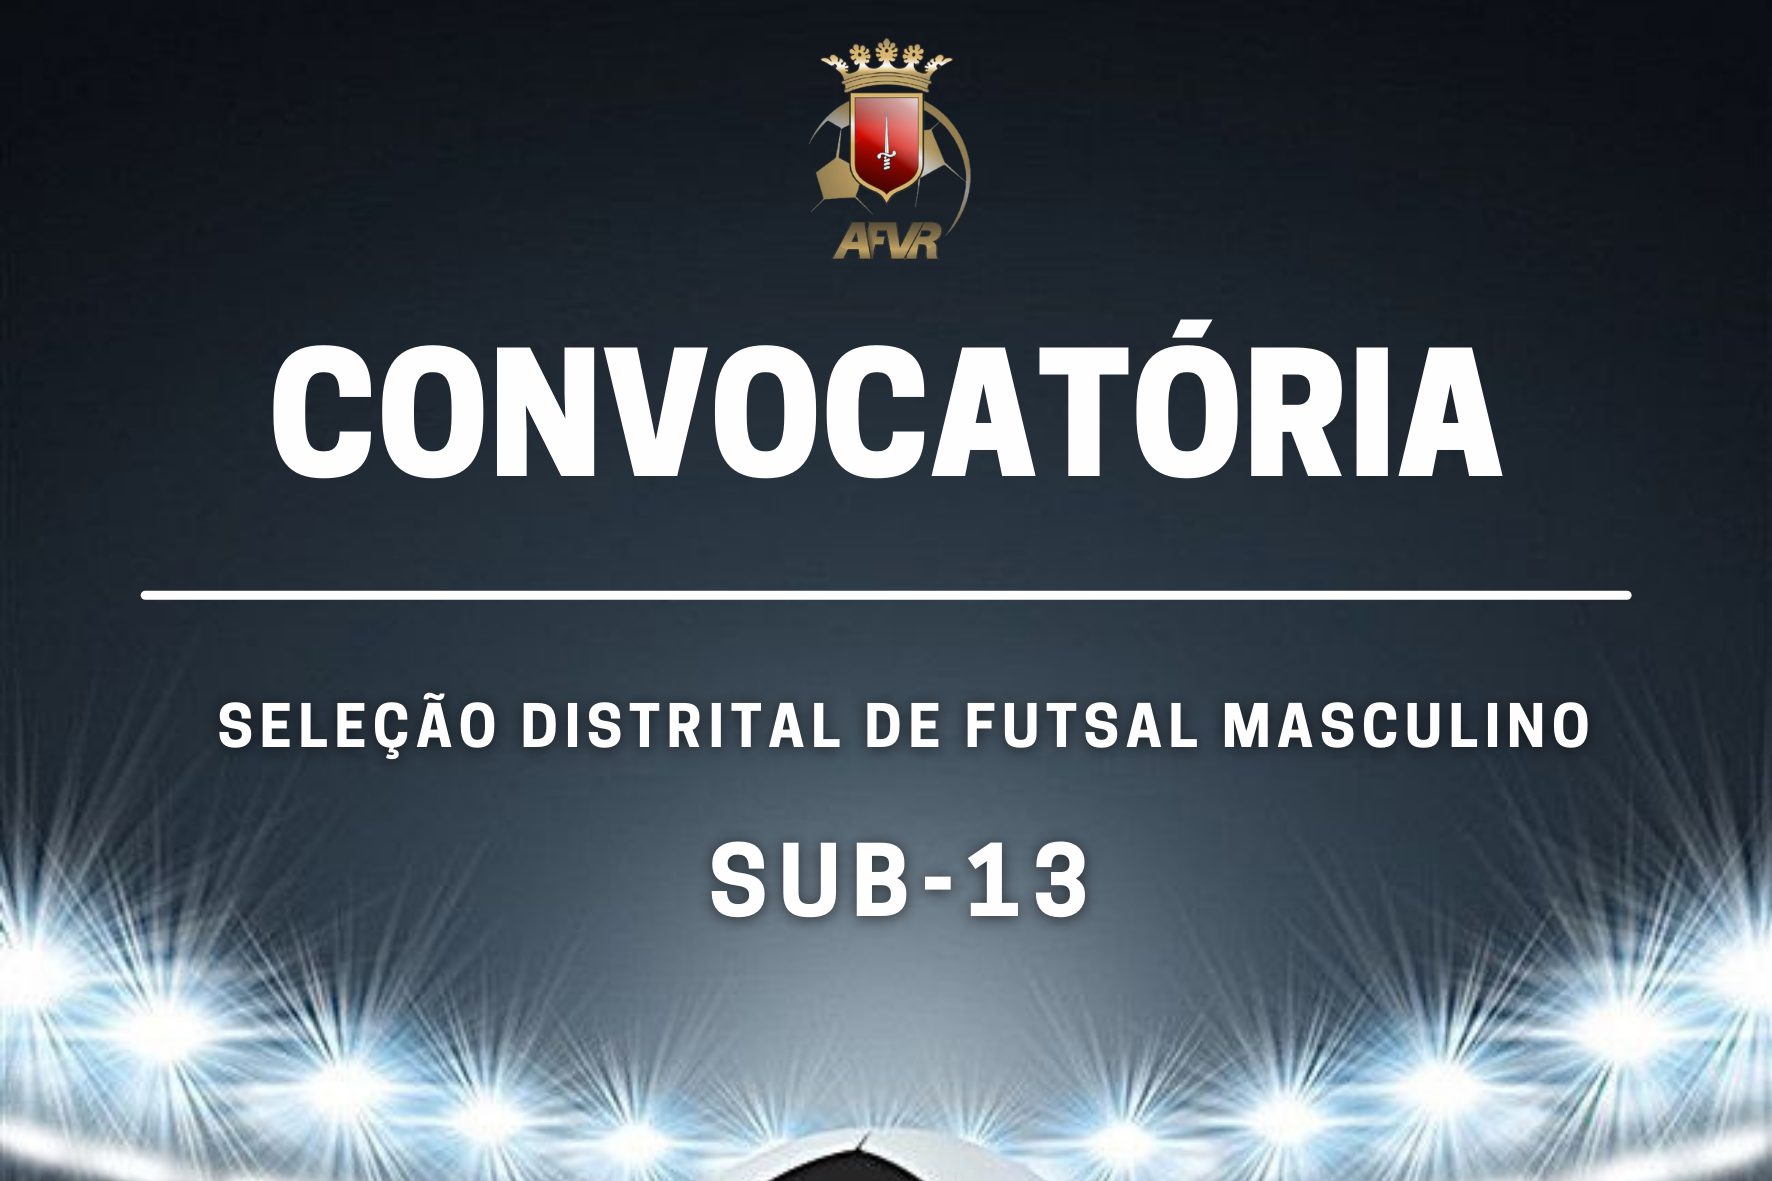 Seleção Distrital de Futsal Masculino “Sub-13”